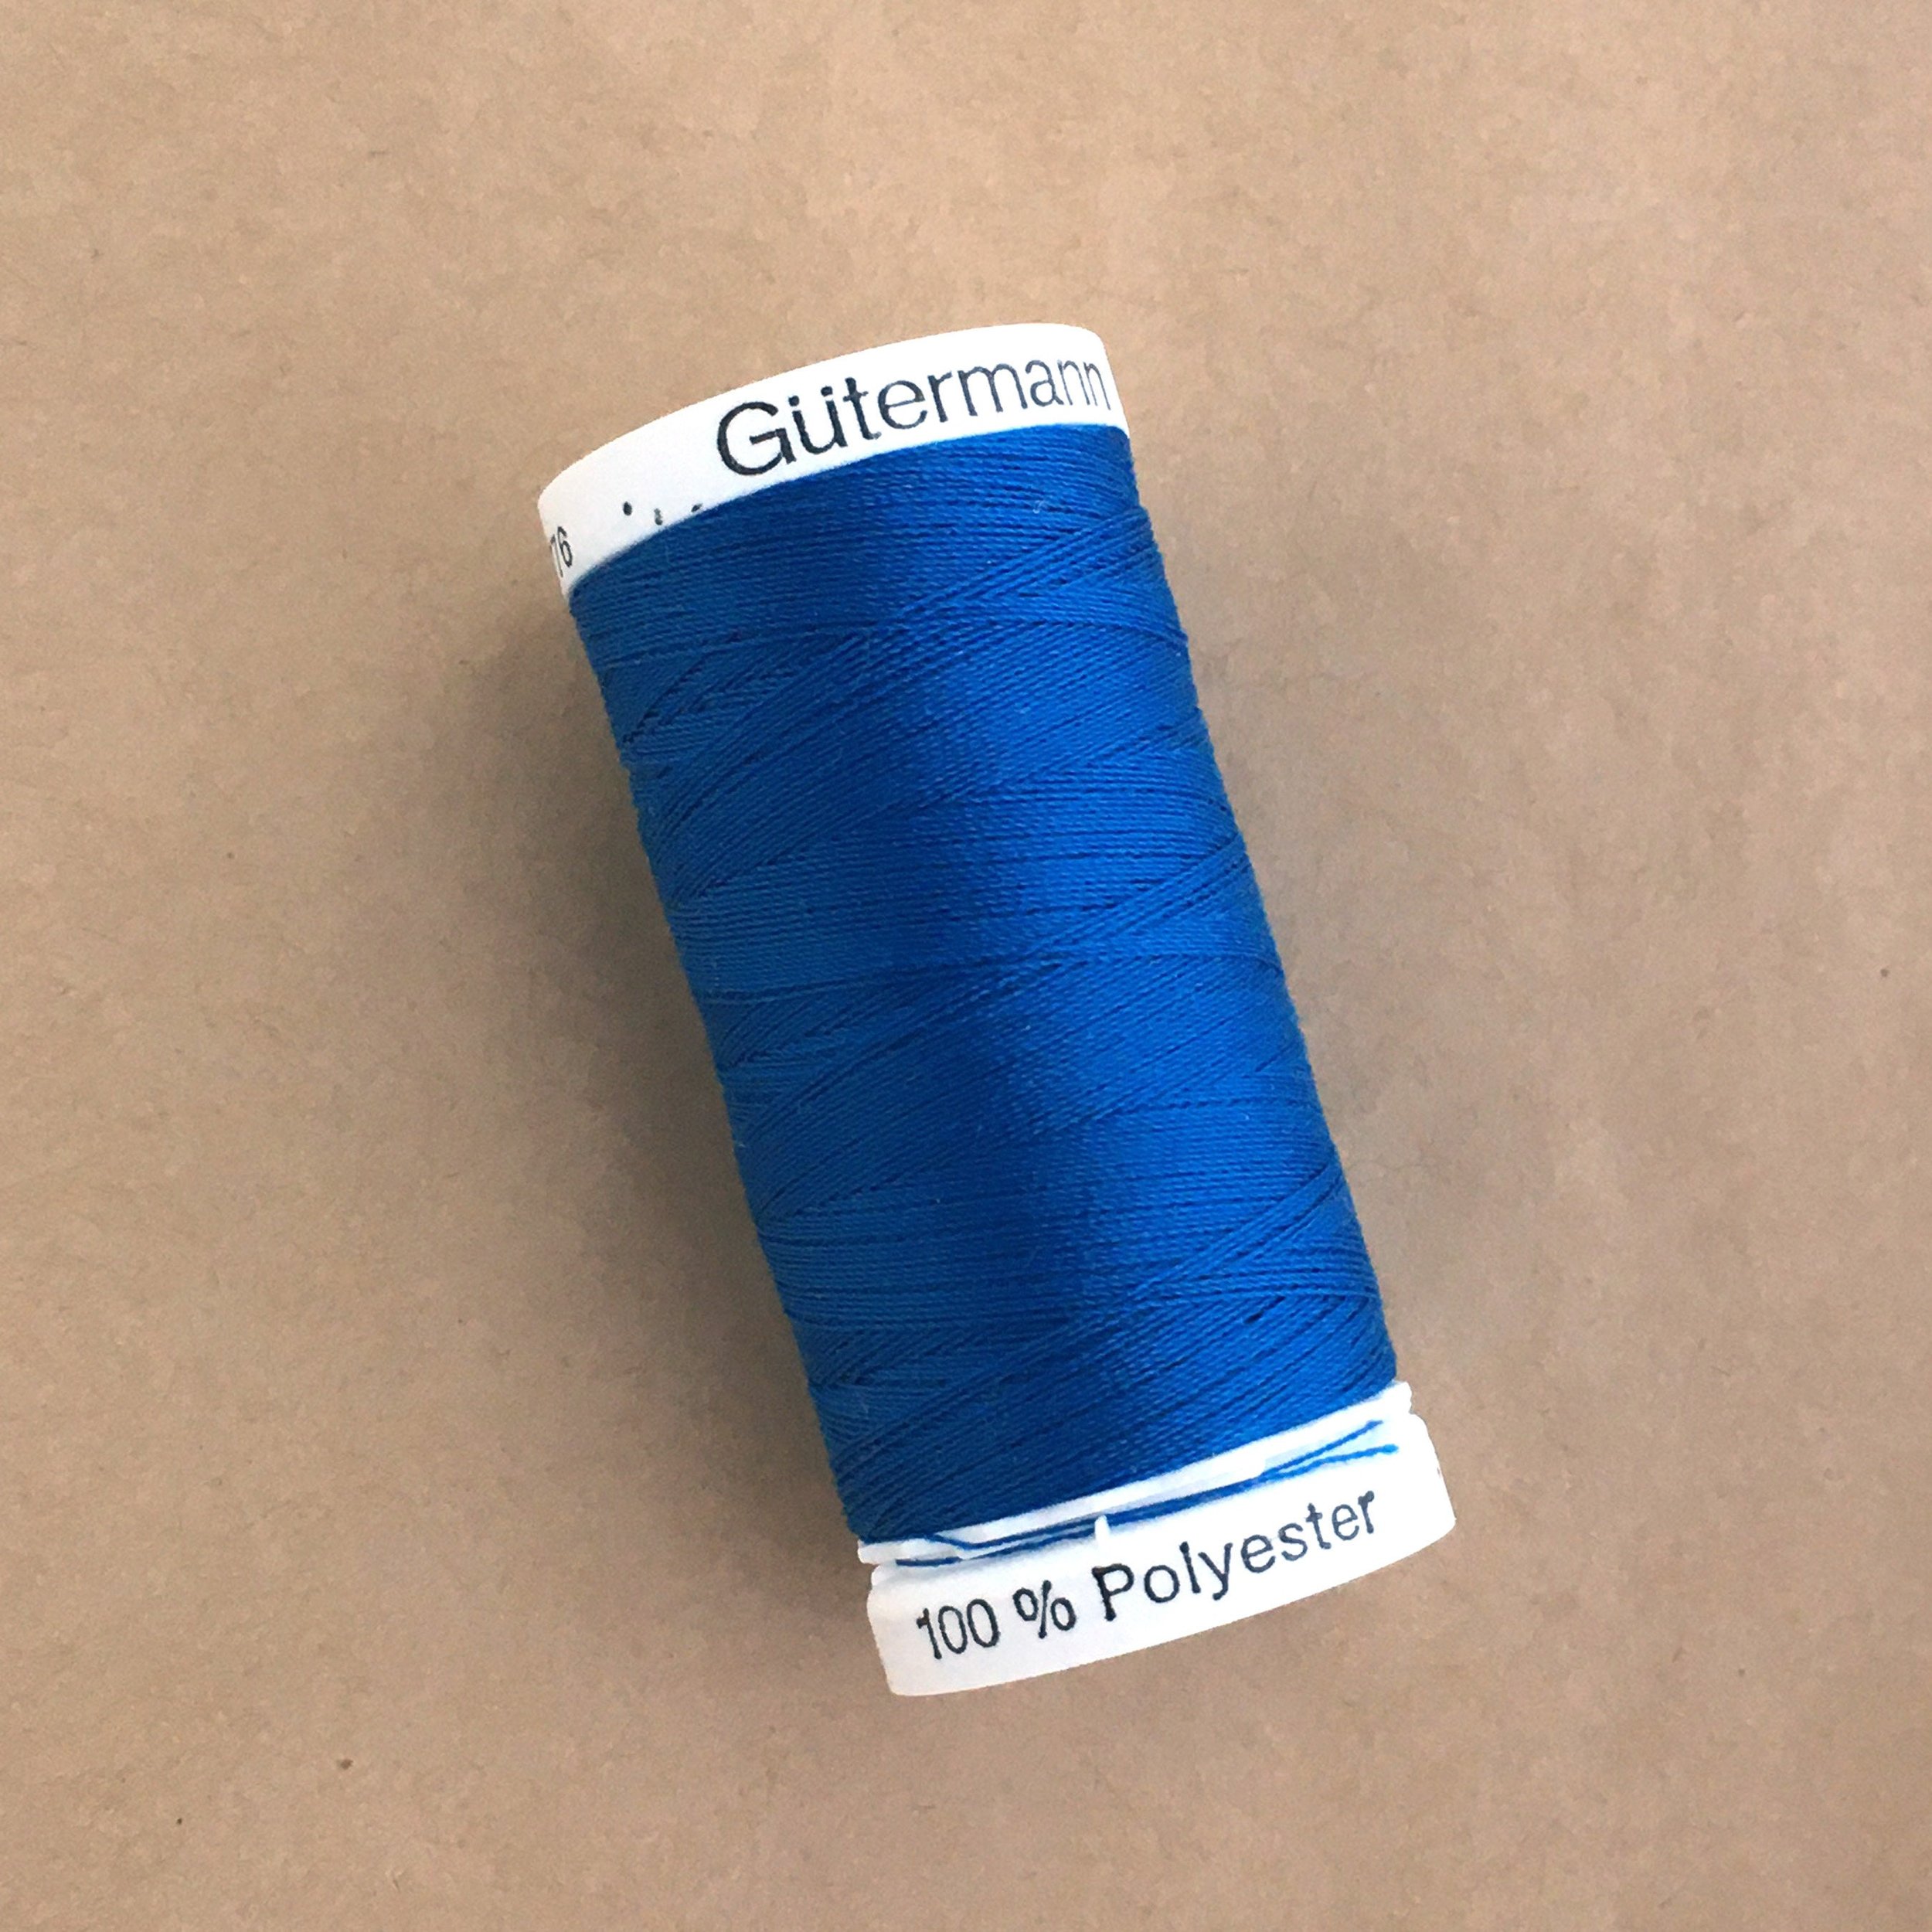 1 black 1 white 3 blue GUTERMANN 100% polyester sew-all thread 274 yard spools 